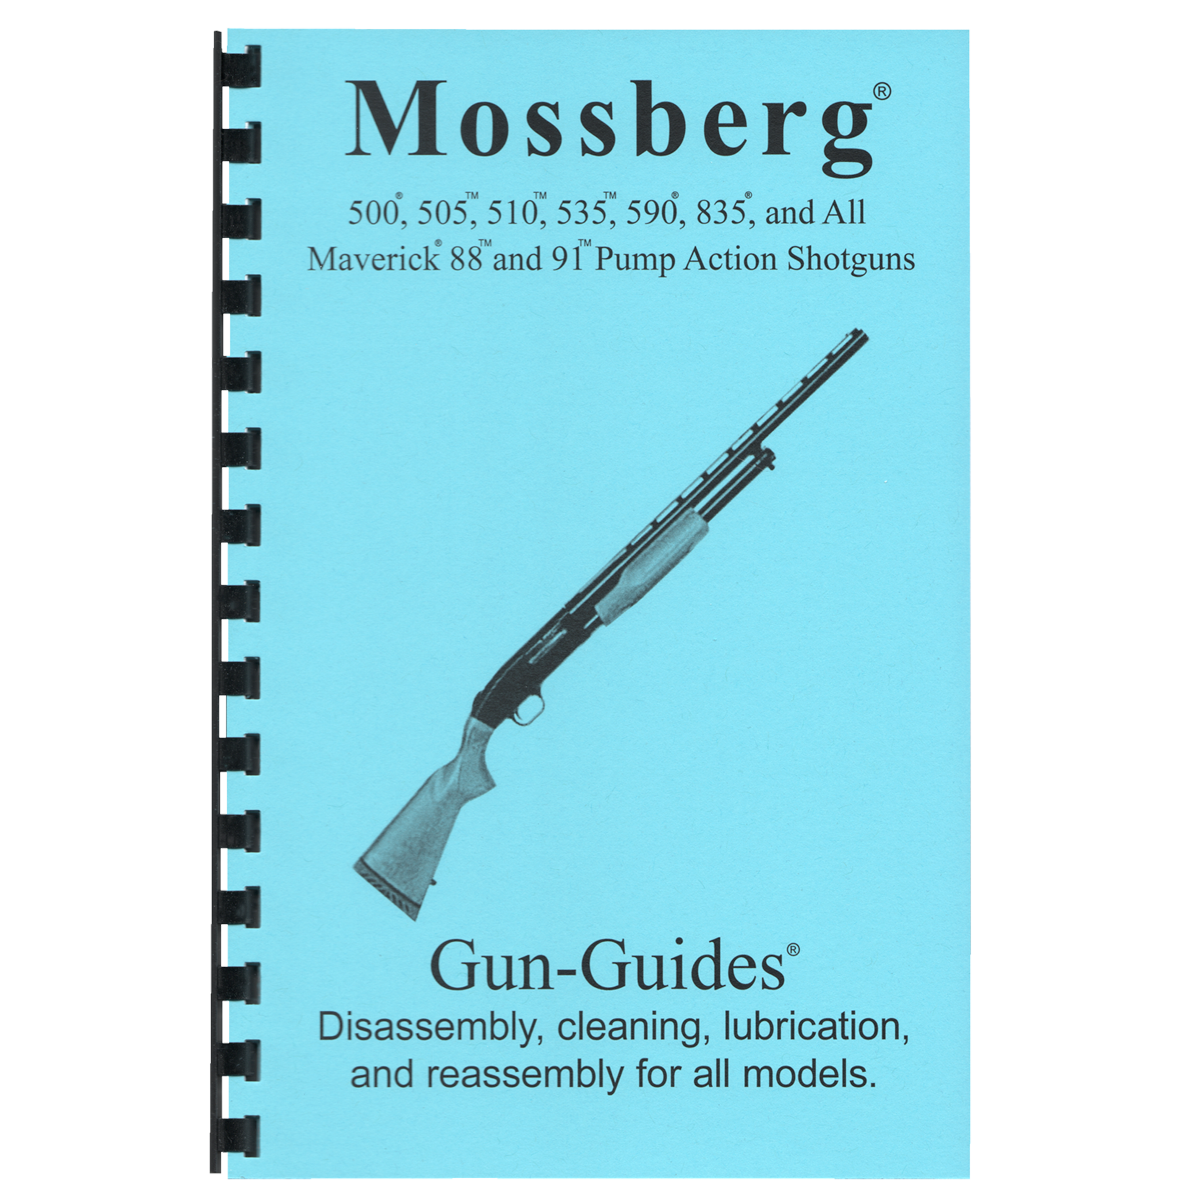 Mossberg Pump Action Shotguns Gun-Guides® Disassembly & Reassembly for All Models